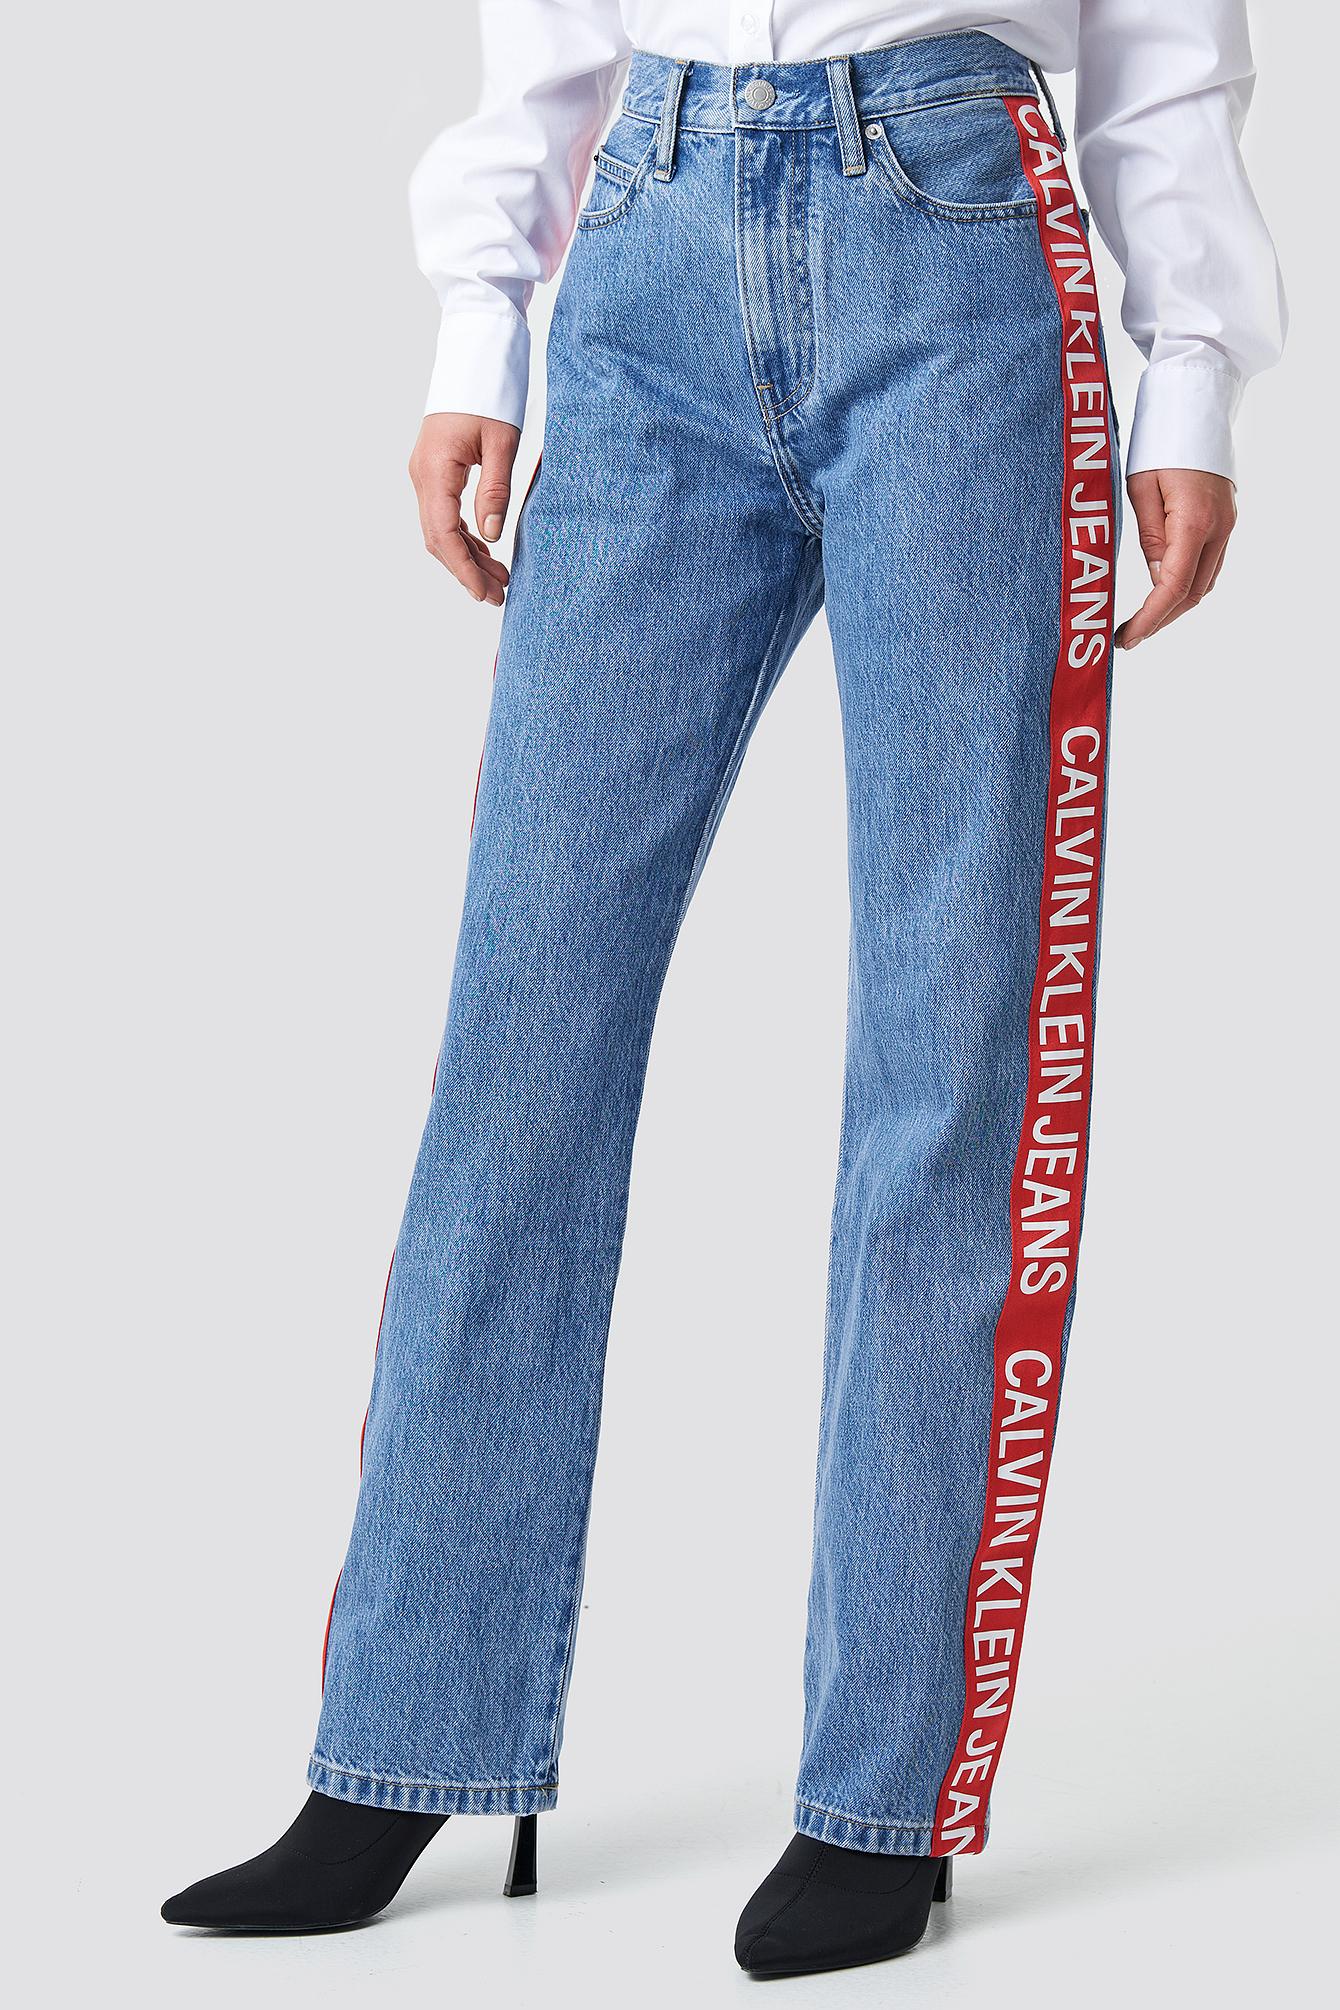 Calvin Klein Red Stripe Jeans Factory Sale, 60% OFF | www.colegiogamarra.com